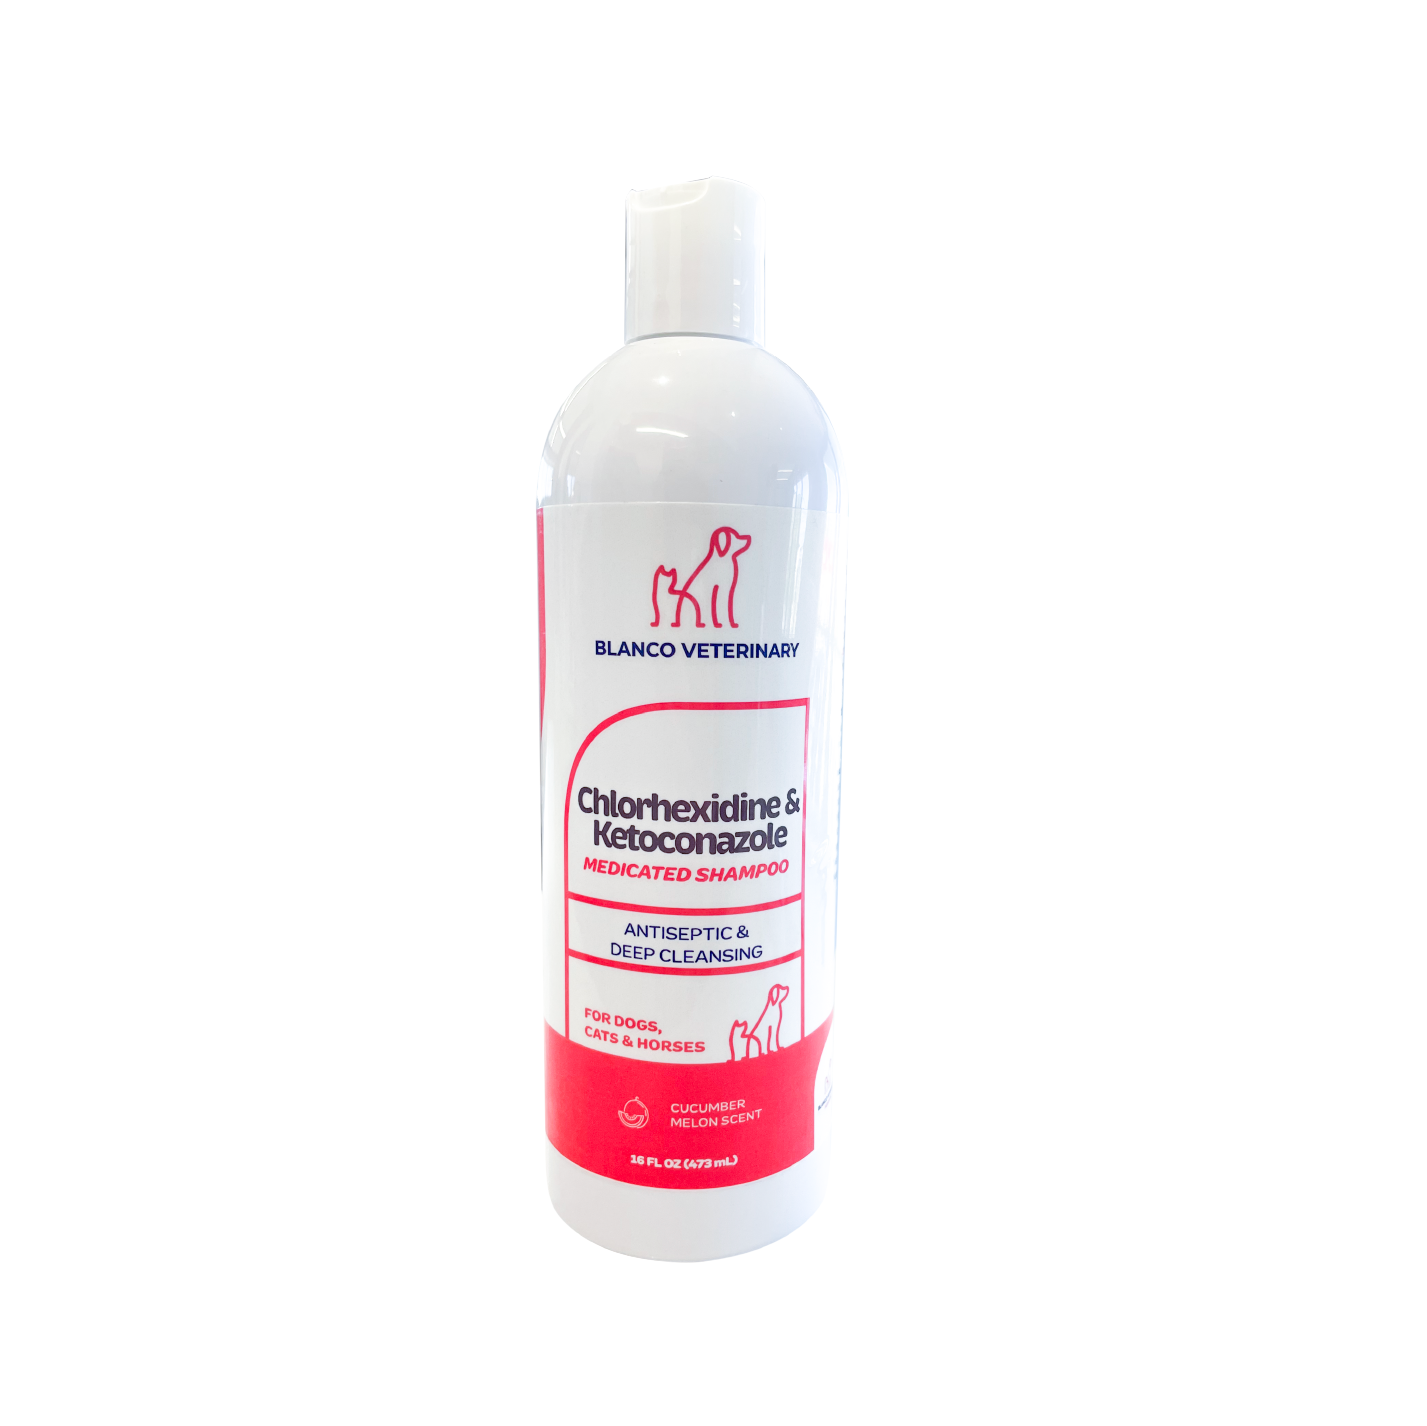 Blanco Veterinary Chlorhexidine & Ketoconazole Medicated Shampoo